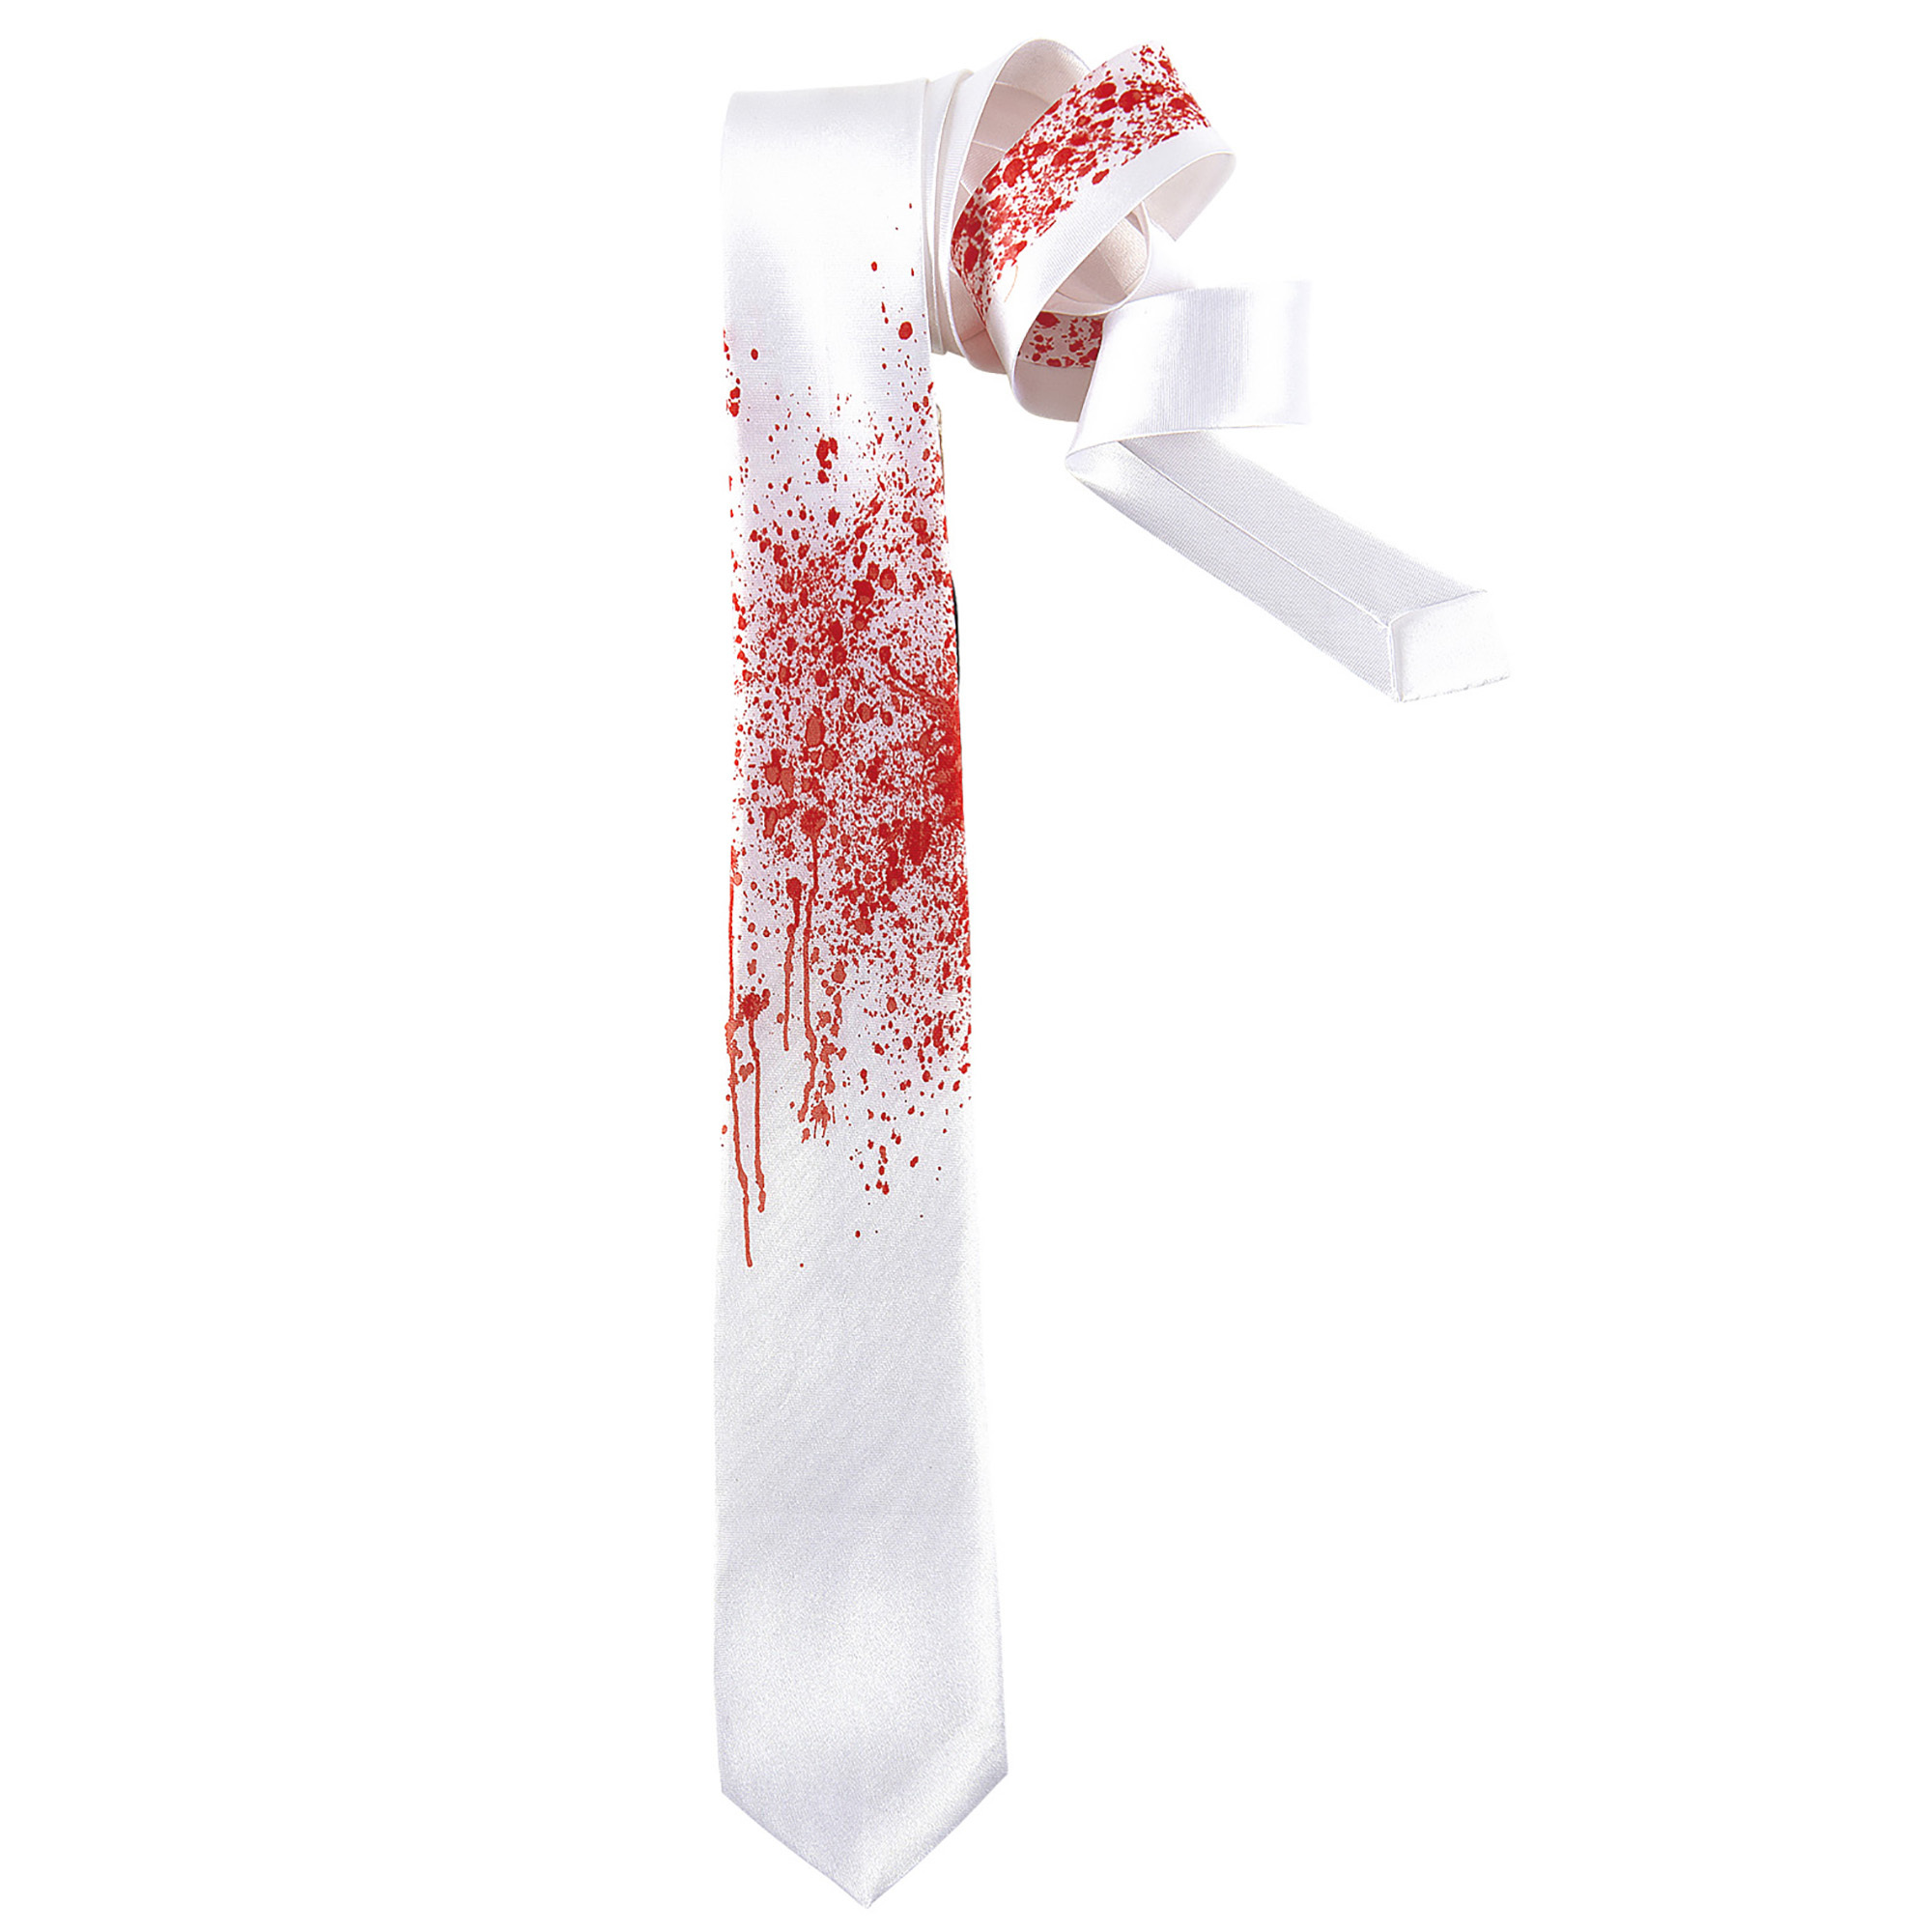 Witte stropdas met bloed spetters